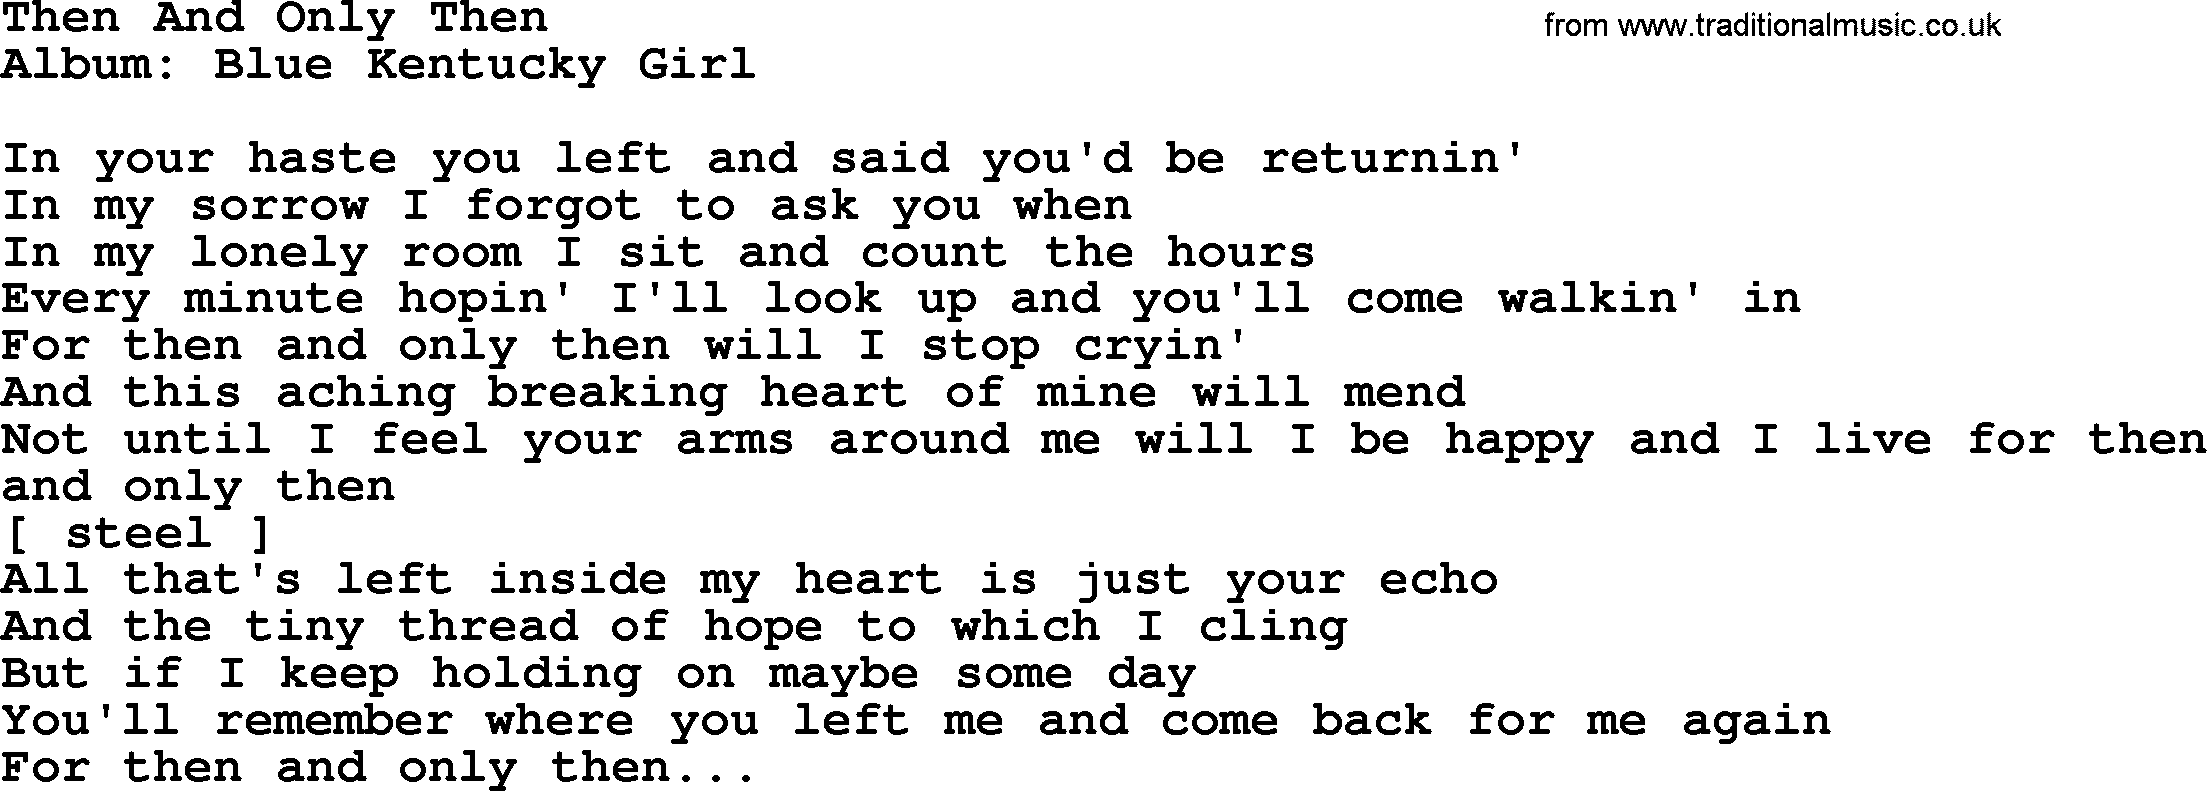 Loretta Lynn song: Then And Only Then lyrics